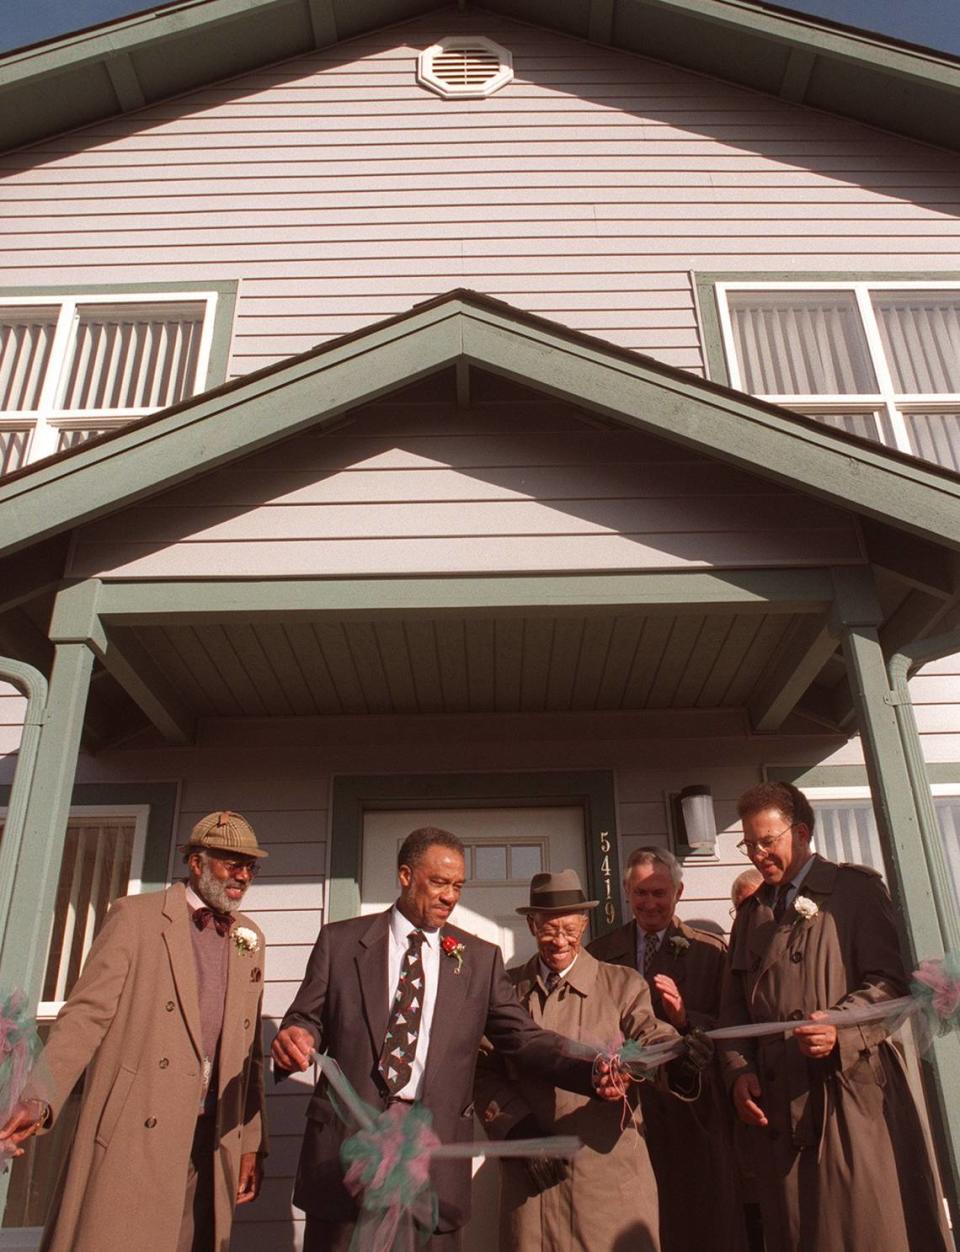 The official ribbon-cutting of ‘Dixon Village’: (left to right) Emmette Bryant, Thomas Dixon, Rev. Brazil, Wayne Morris (behind) and Hugh Price. Photo taken Sept. 14, 1995